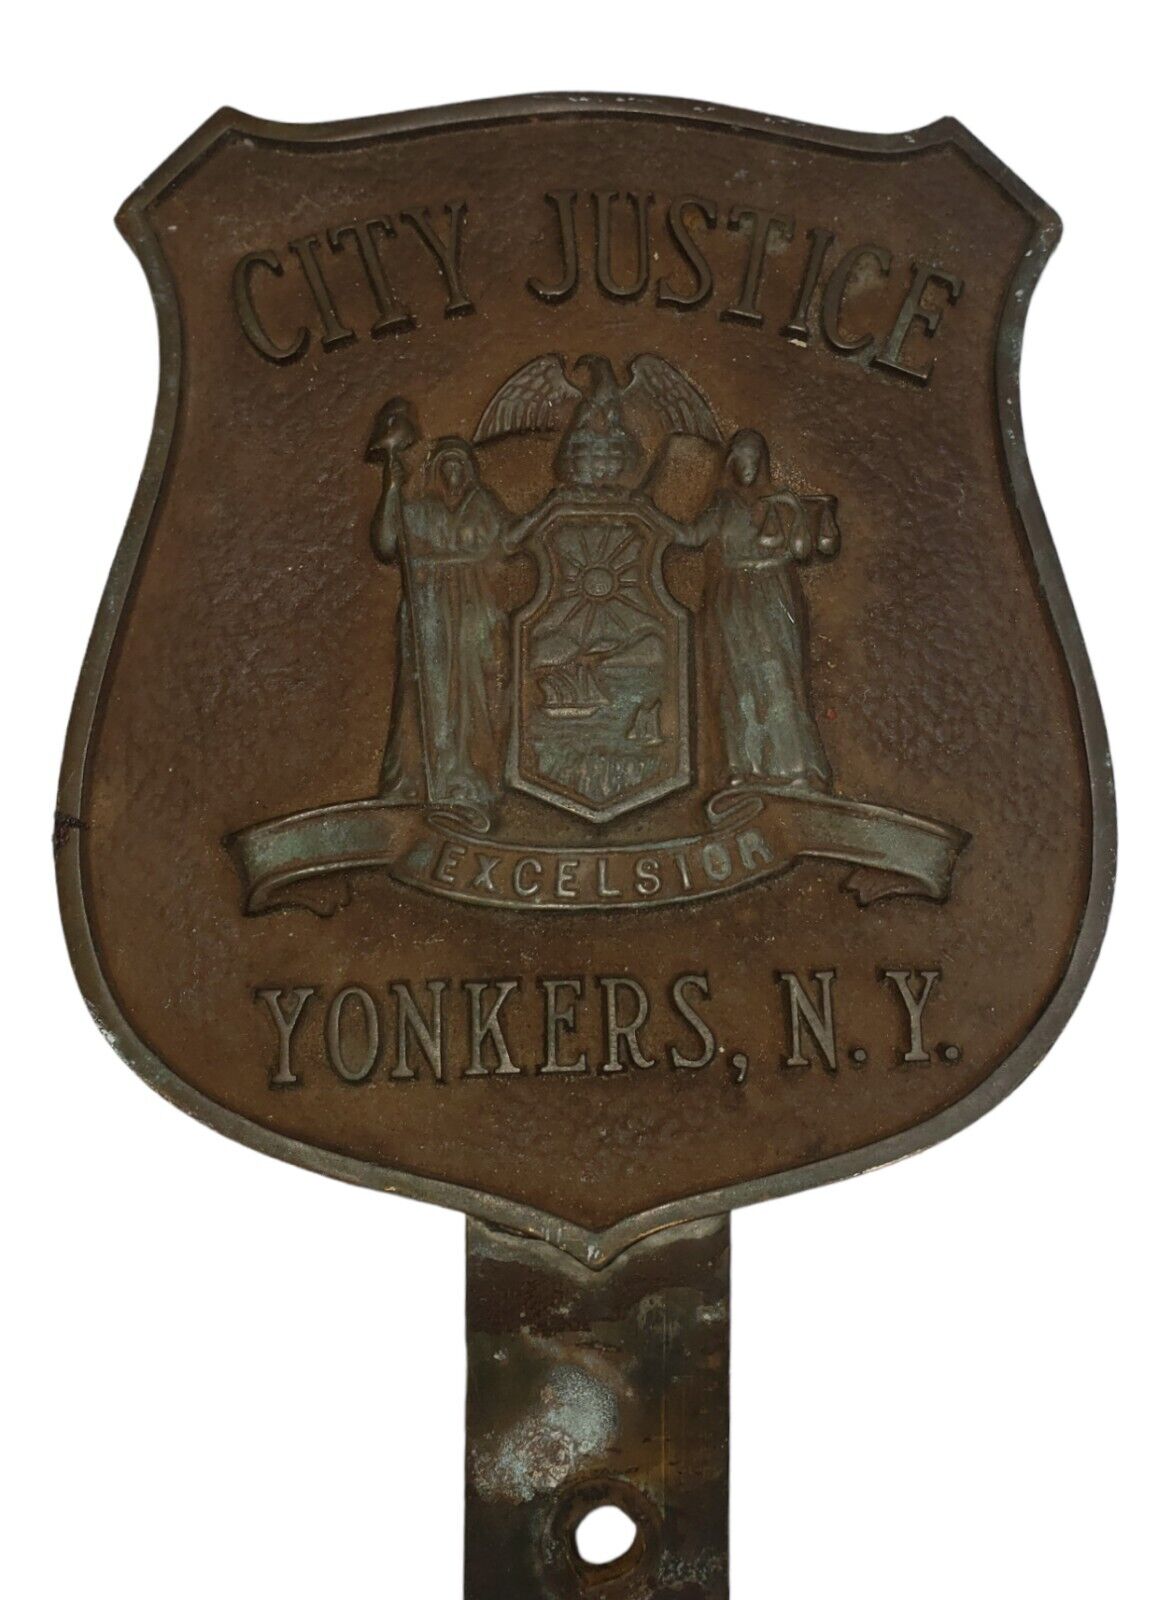 Vintage City Justice Yonkers N.Y Brass Plaque Advertising Nameplate Sign